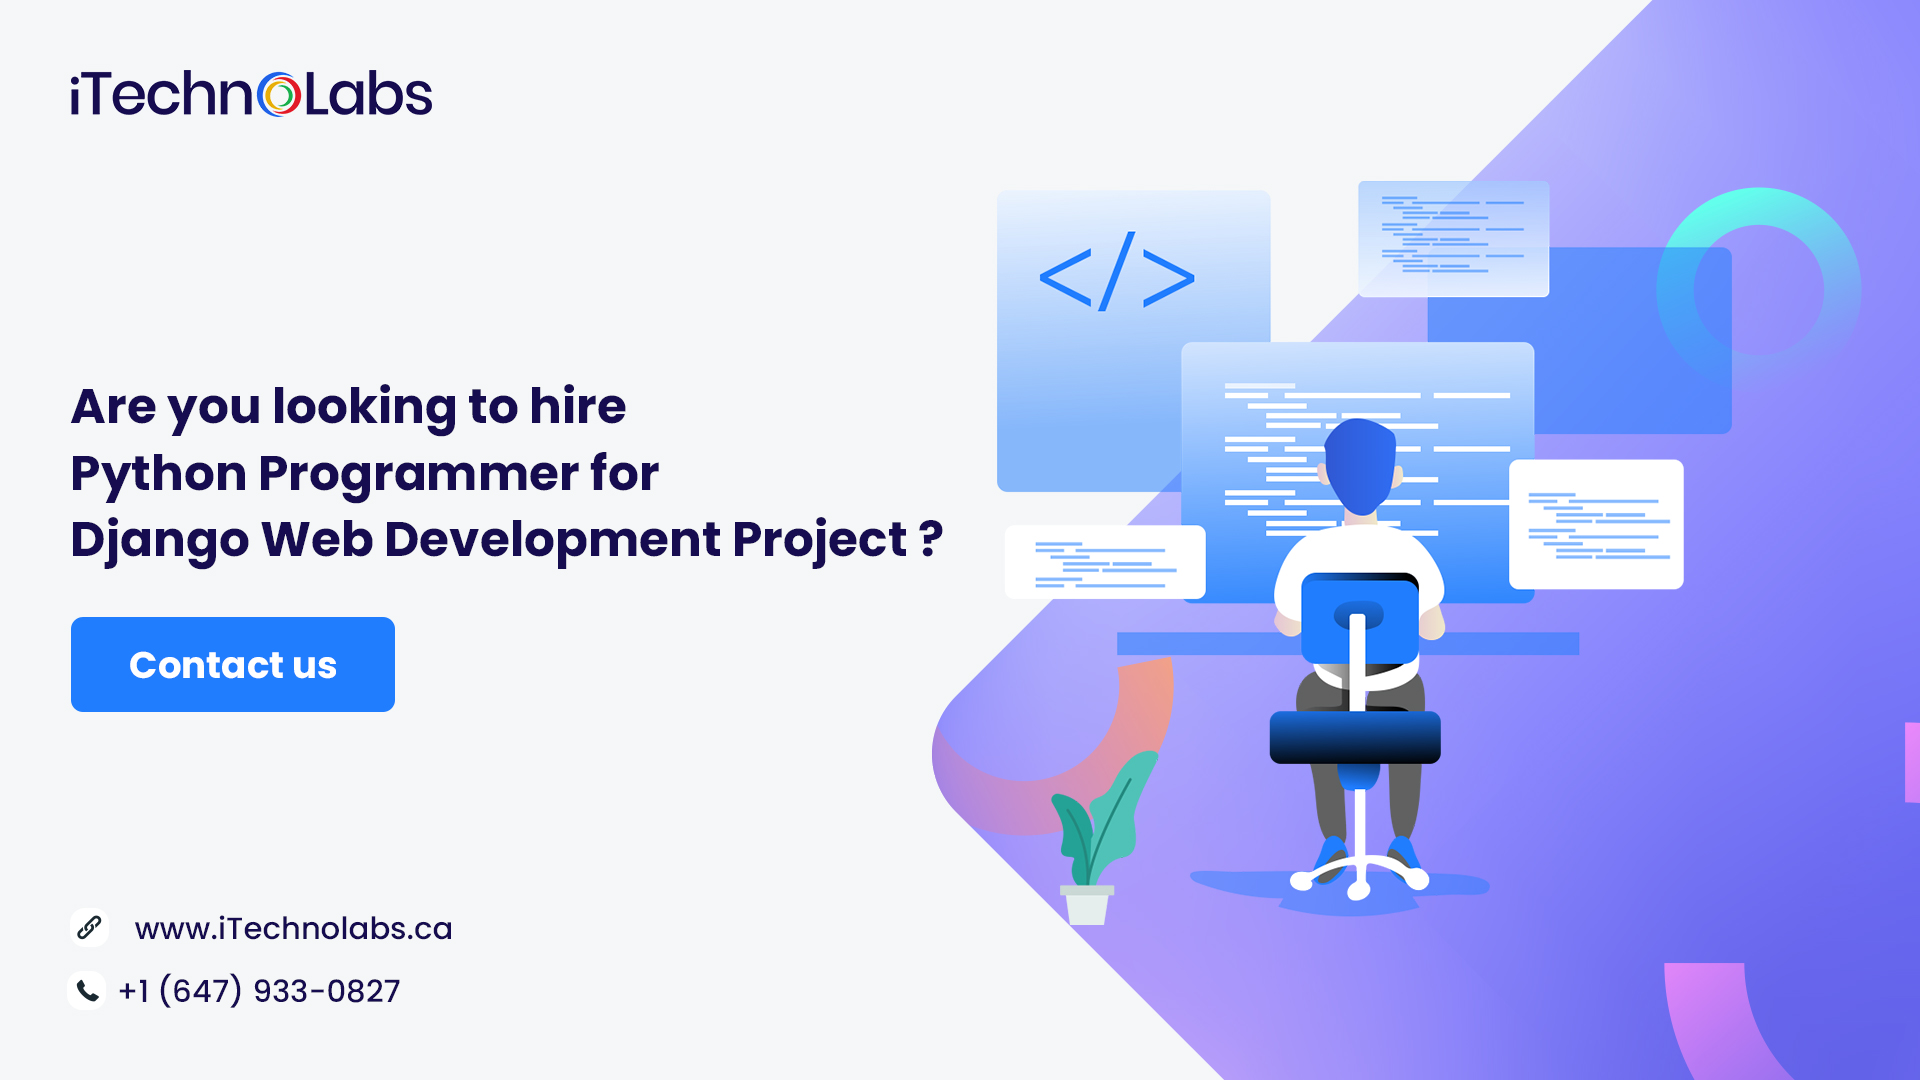 hire Python Programmers for Django Web Development Project itechnolabs